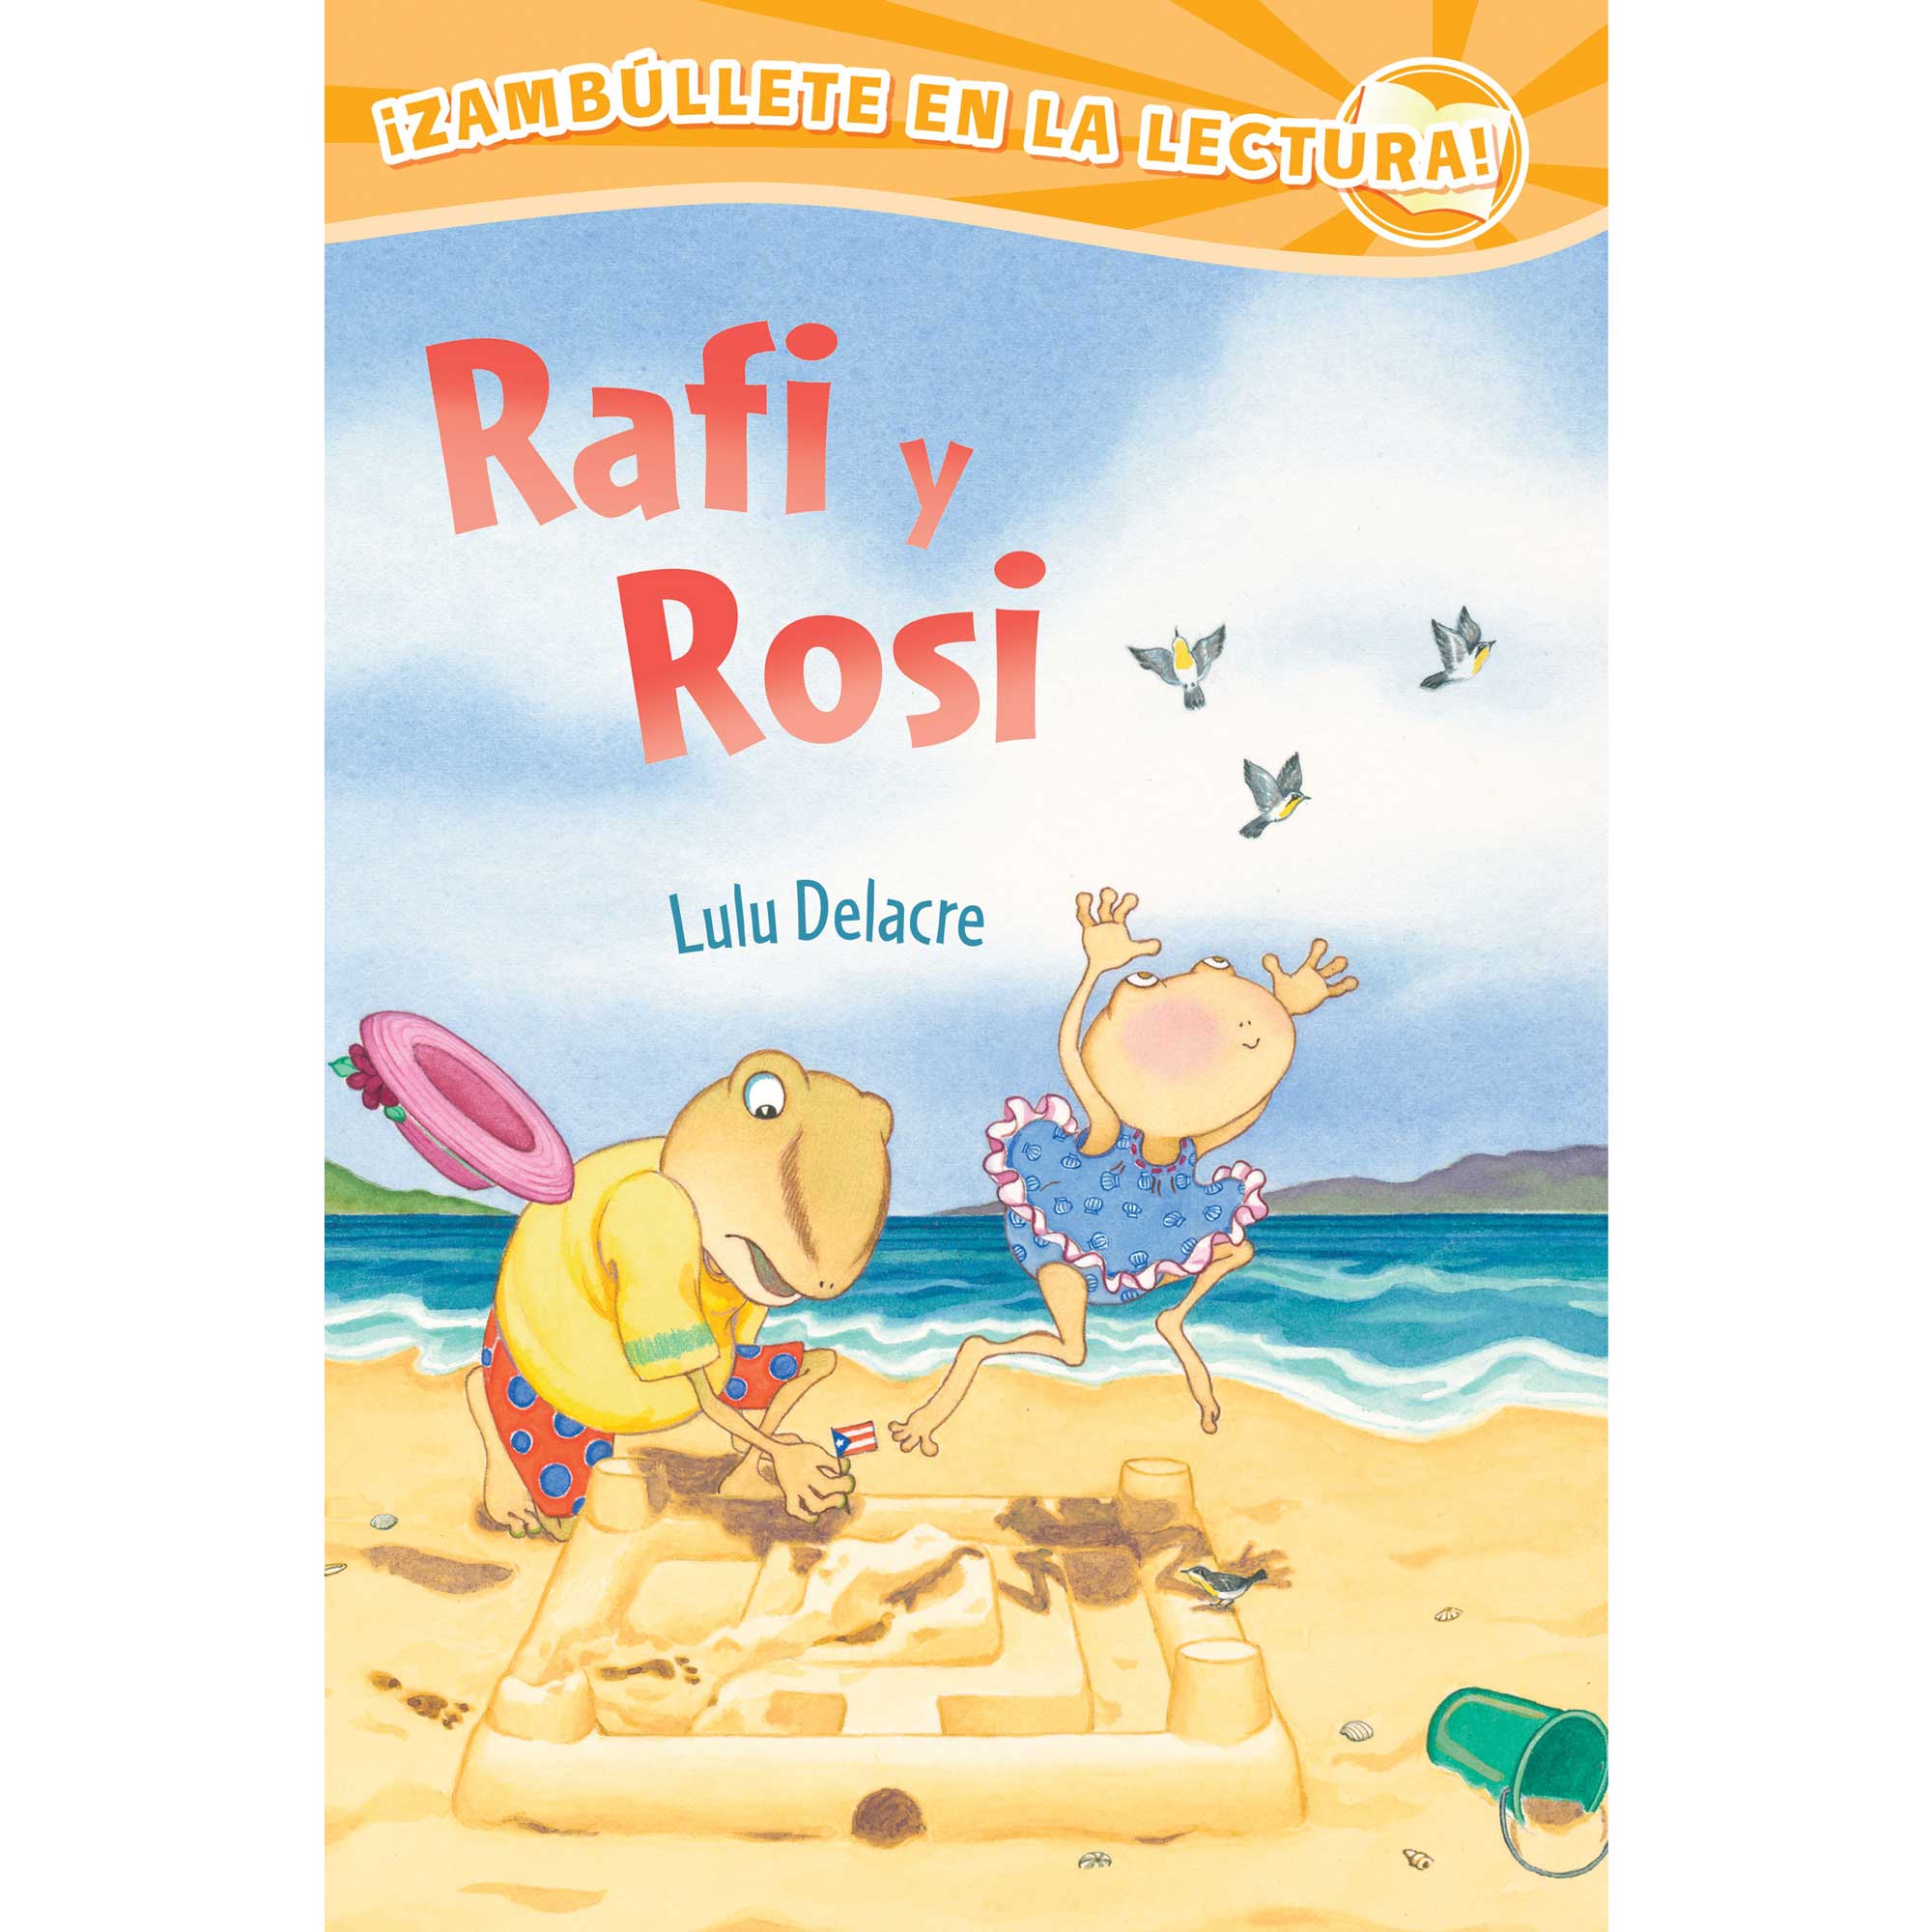 Rafi y Rosi by Lulu Delacre